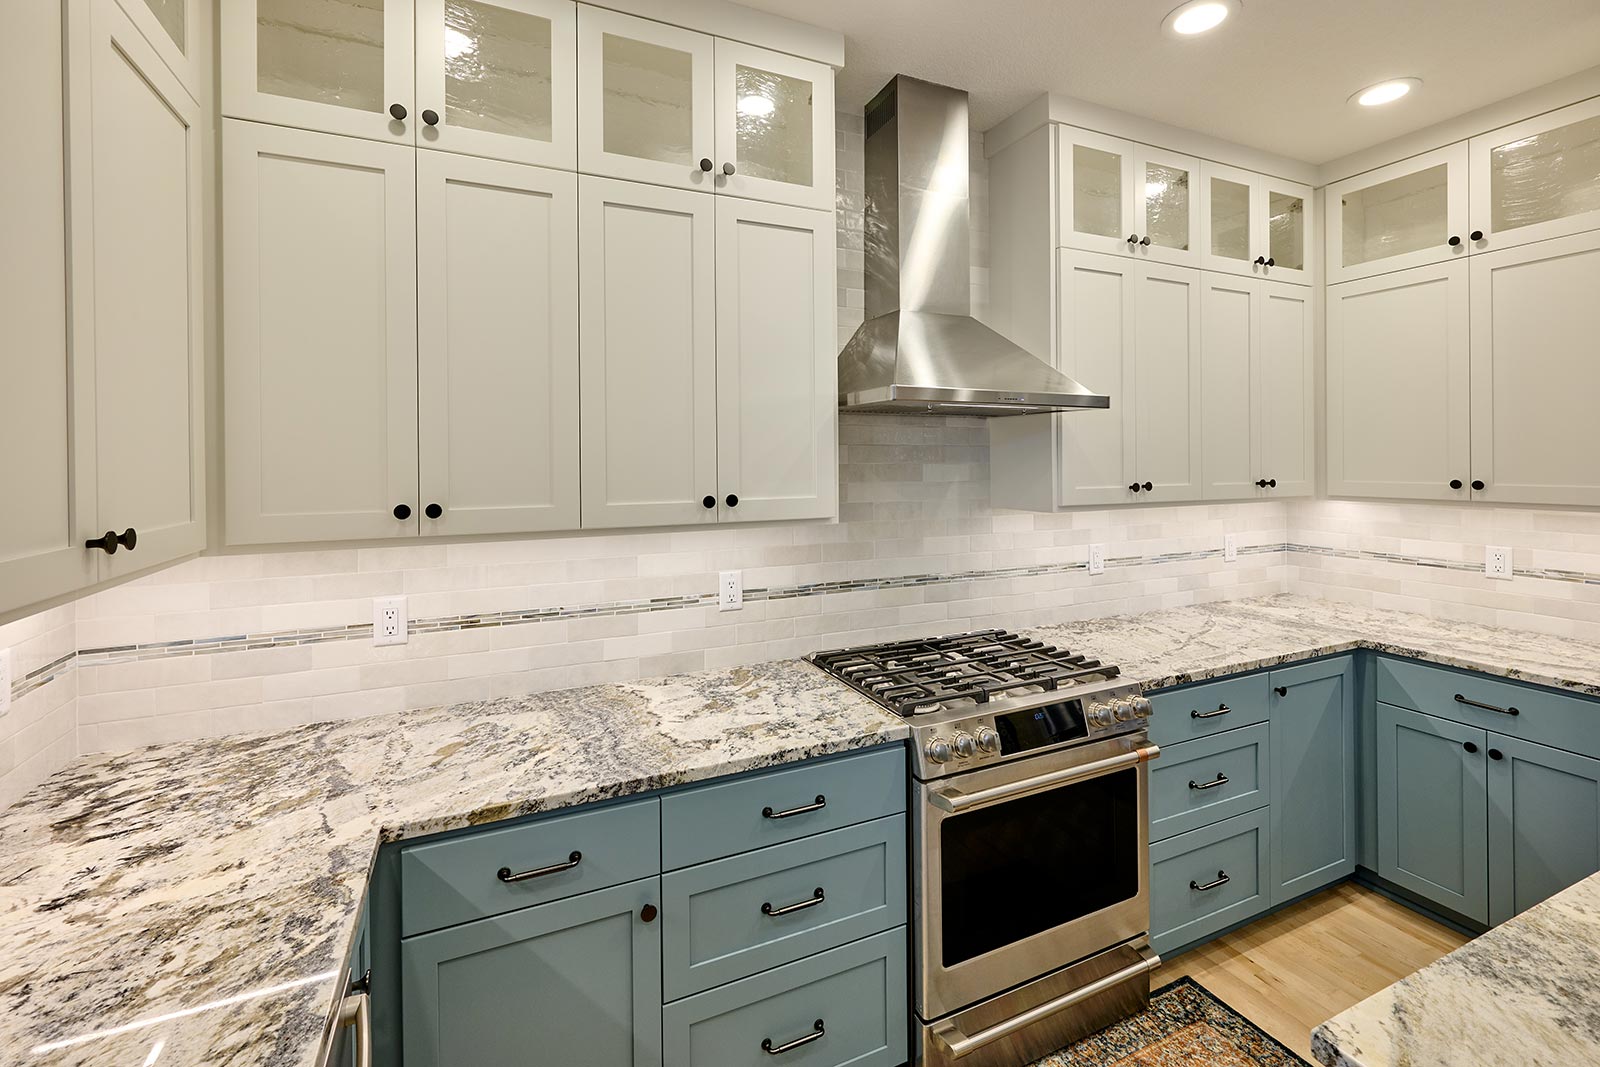 Contemporary kitchen remodel. New custom cabinets in blue. Henderer Design + Build + Remodel